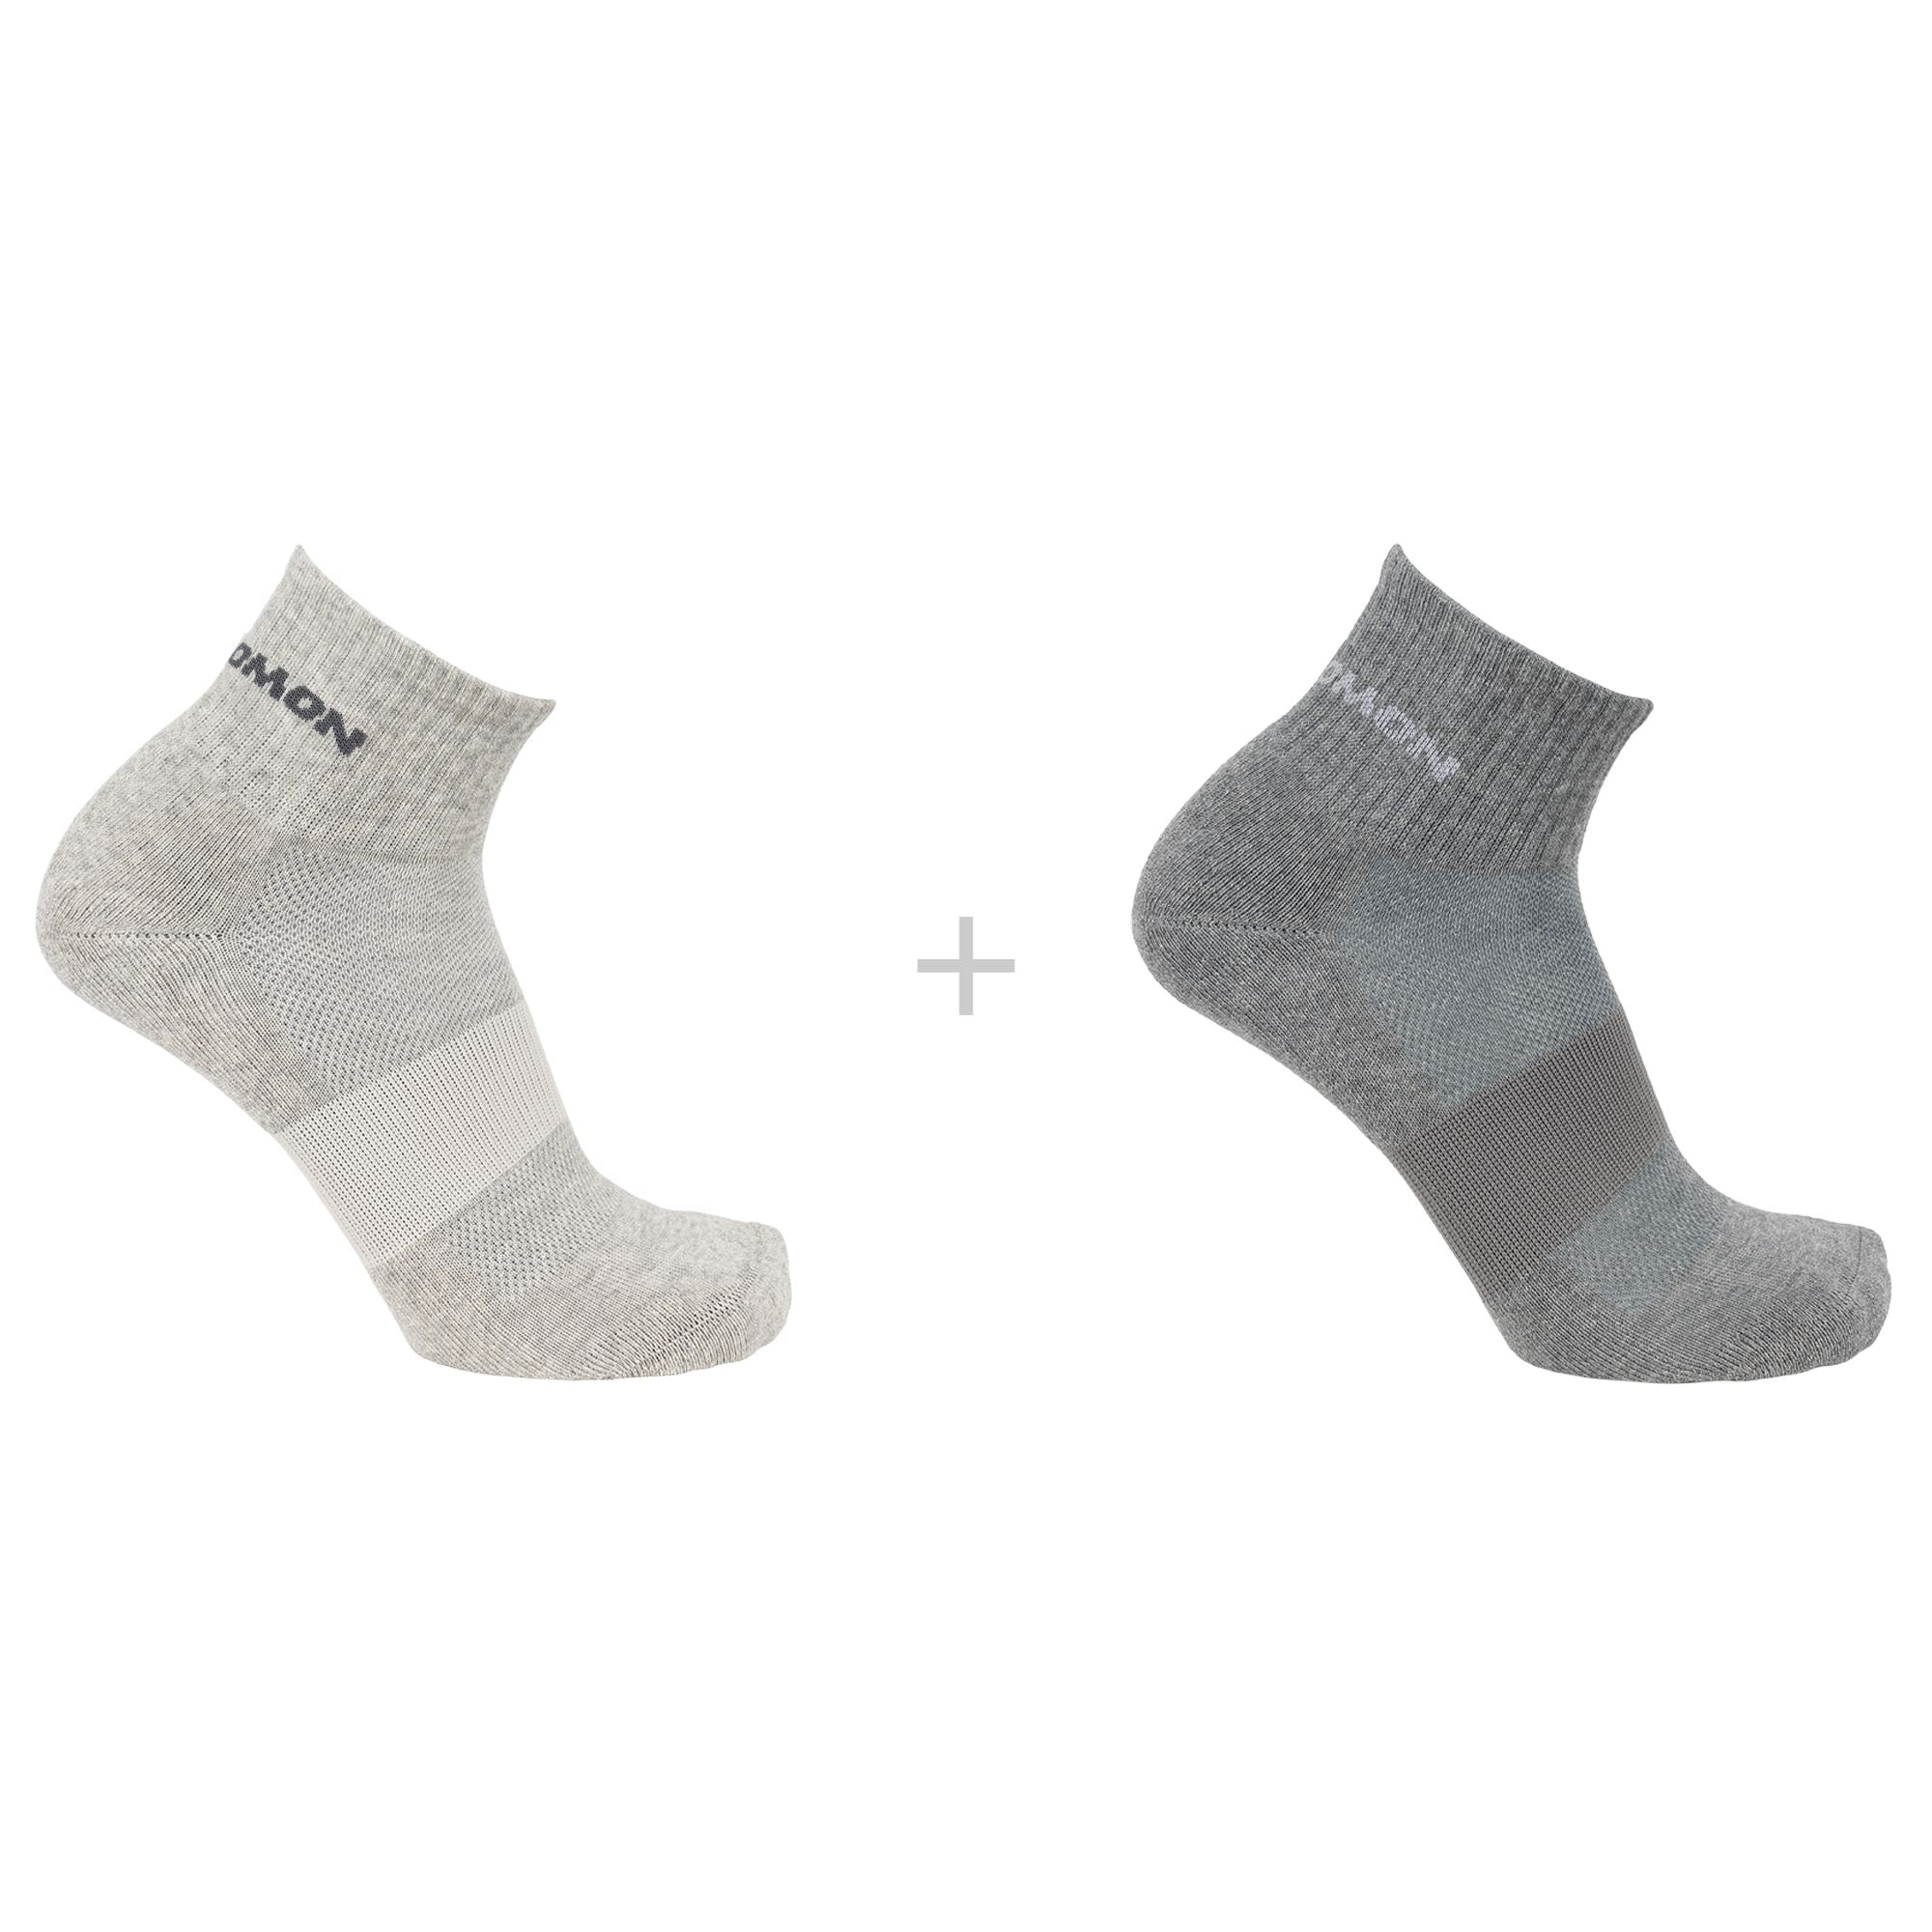 Salomon Evasion Ankle 2-Pack Socks Light Grey/Heather Medium L 